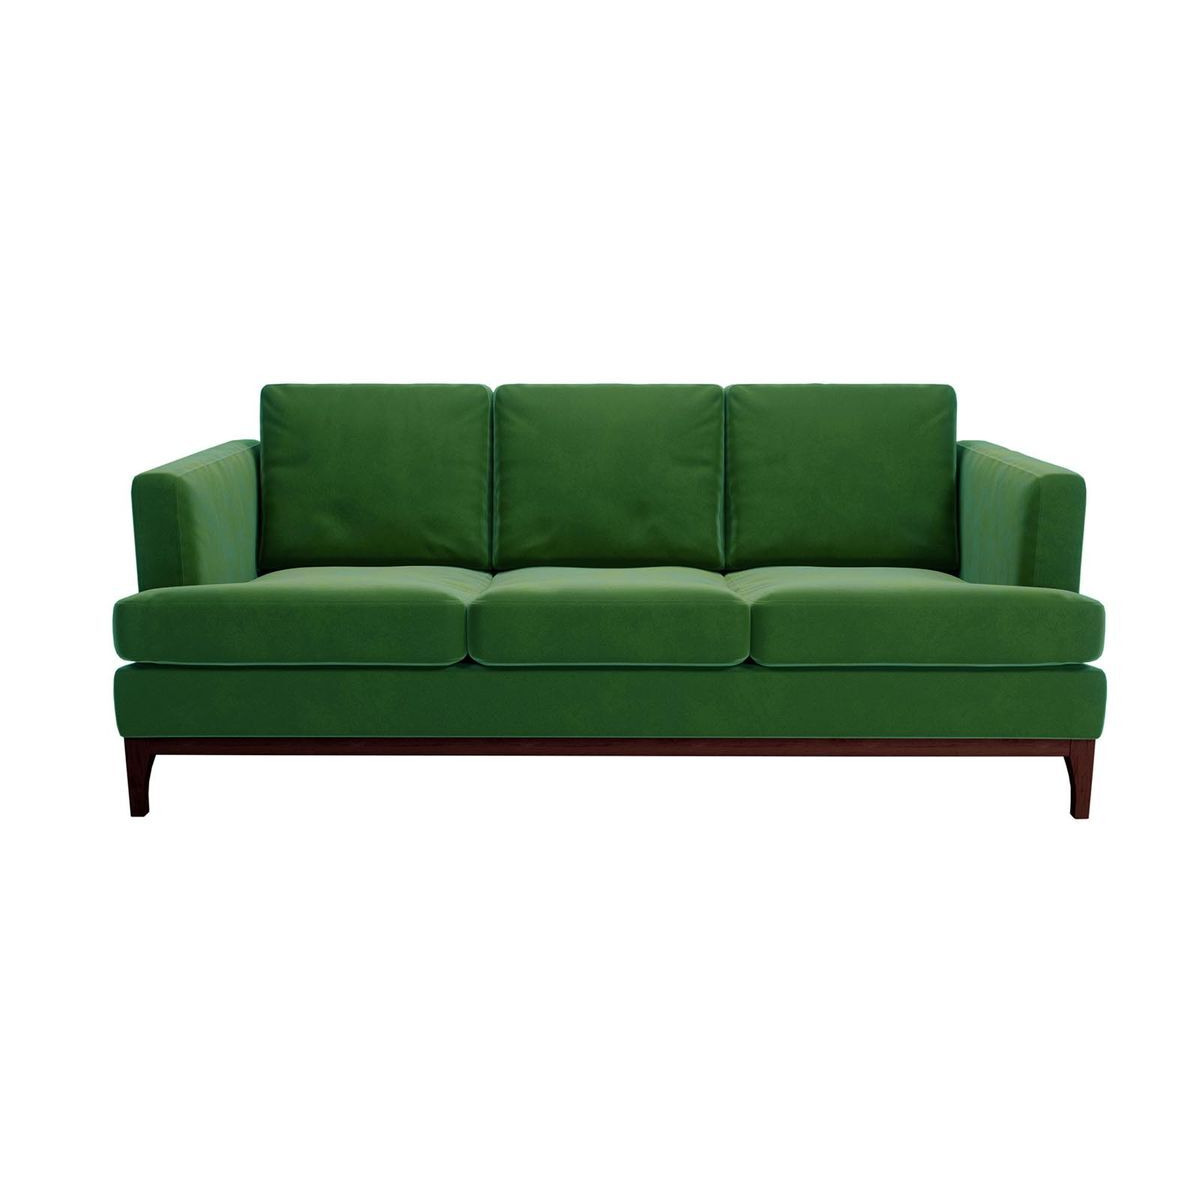 Scarlett 3 Seater Sofa, dark green, Leg colour: dark oak - image 1